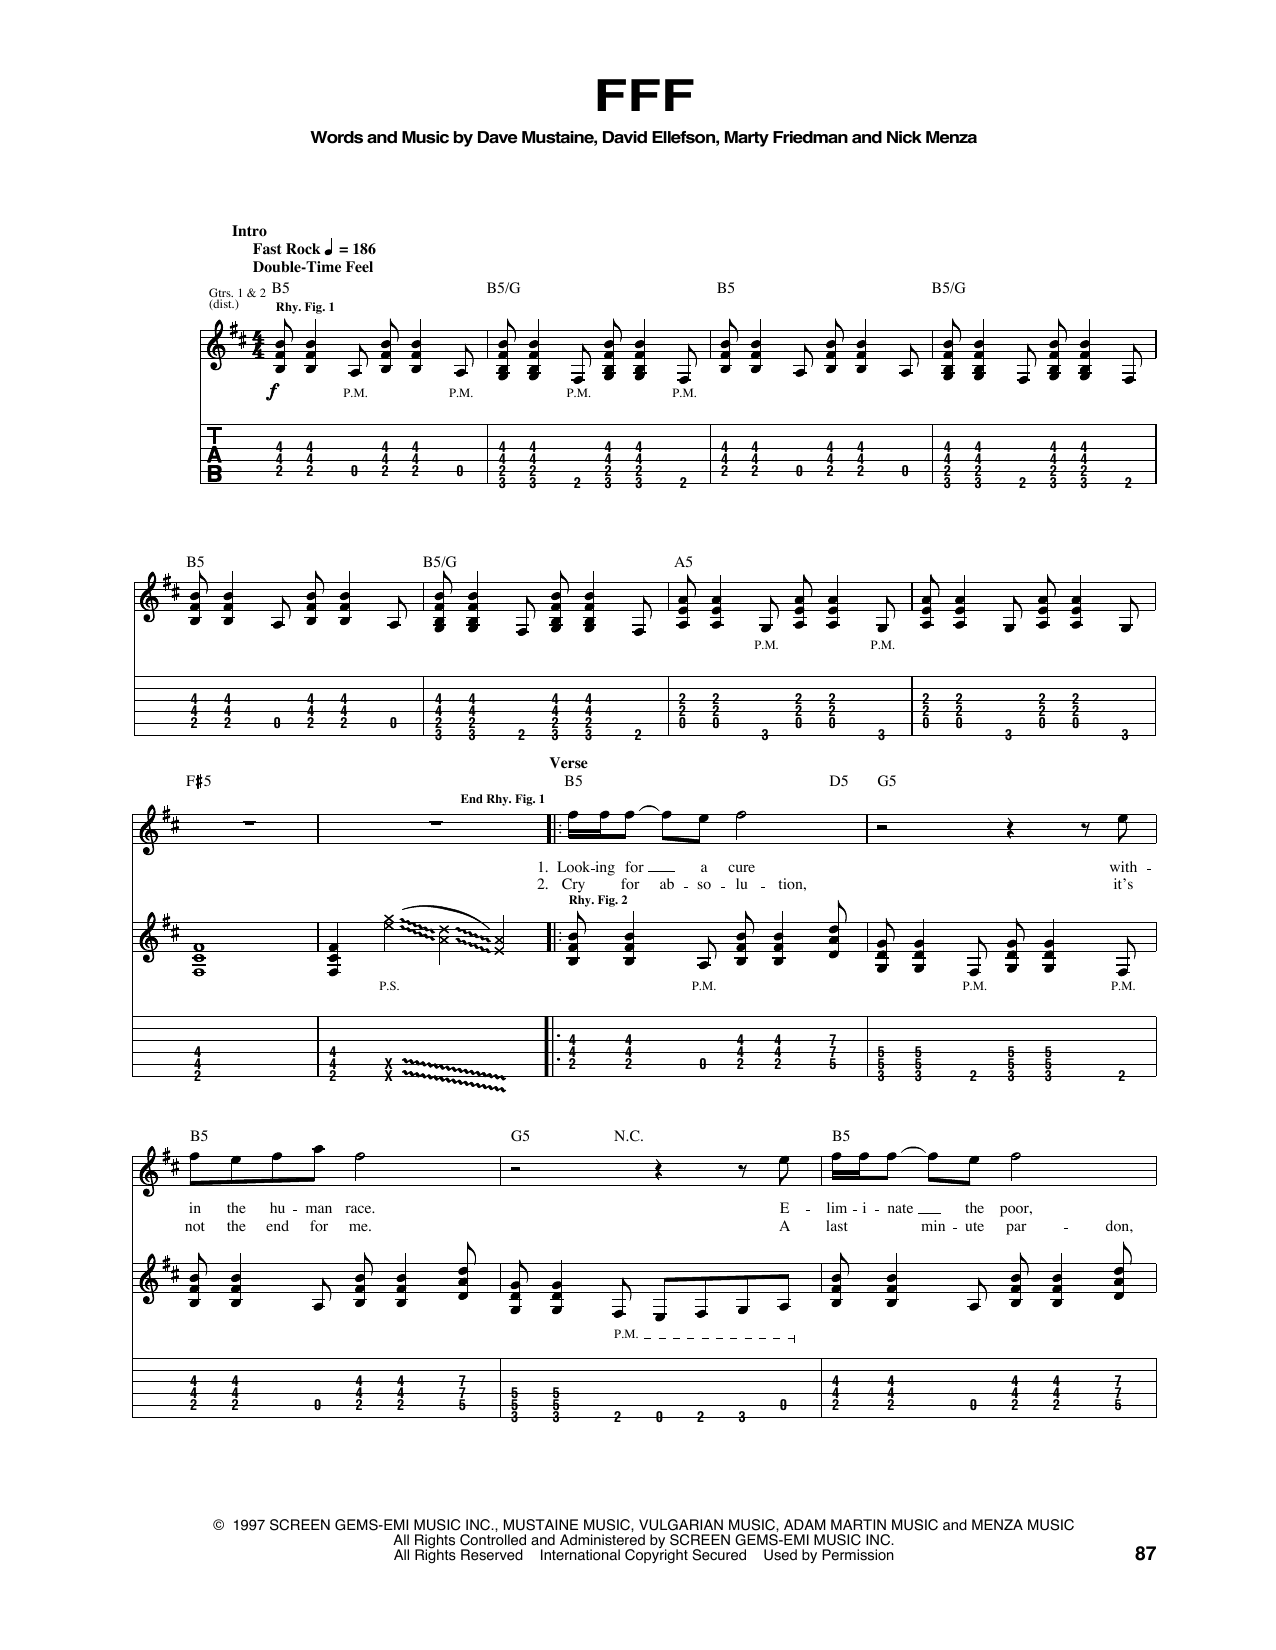 Megadeth FFF Sheet Music Notes & Chords for Guitar Tab - Download or Print PDF